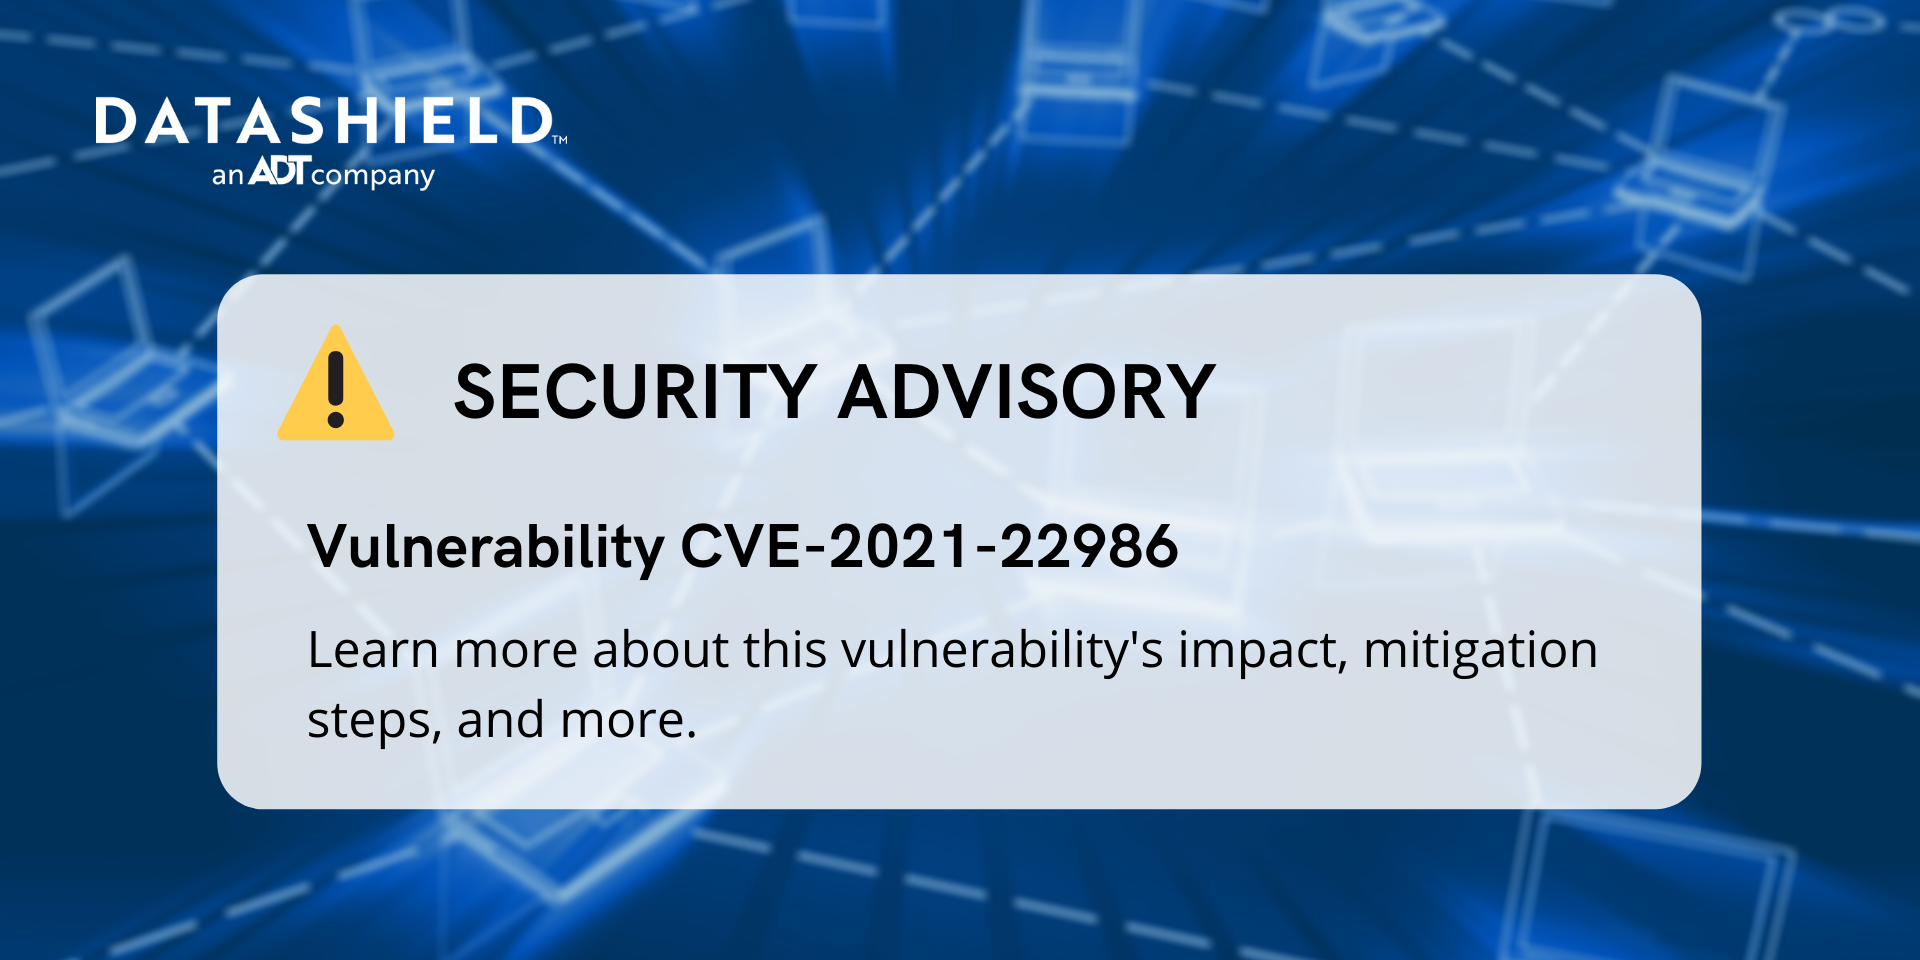 Vulnerability CVE-2021-22986